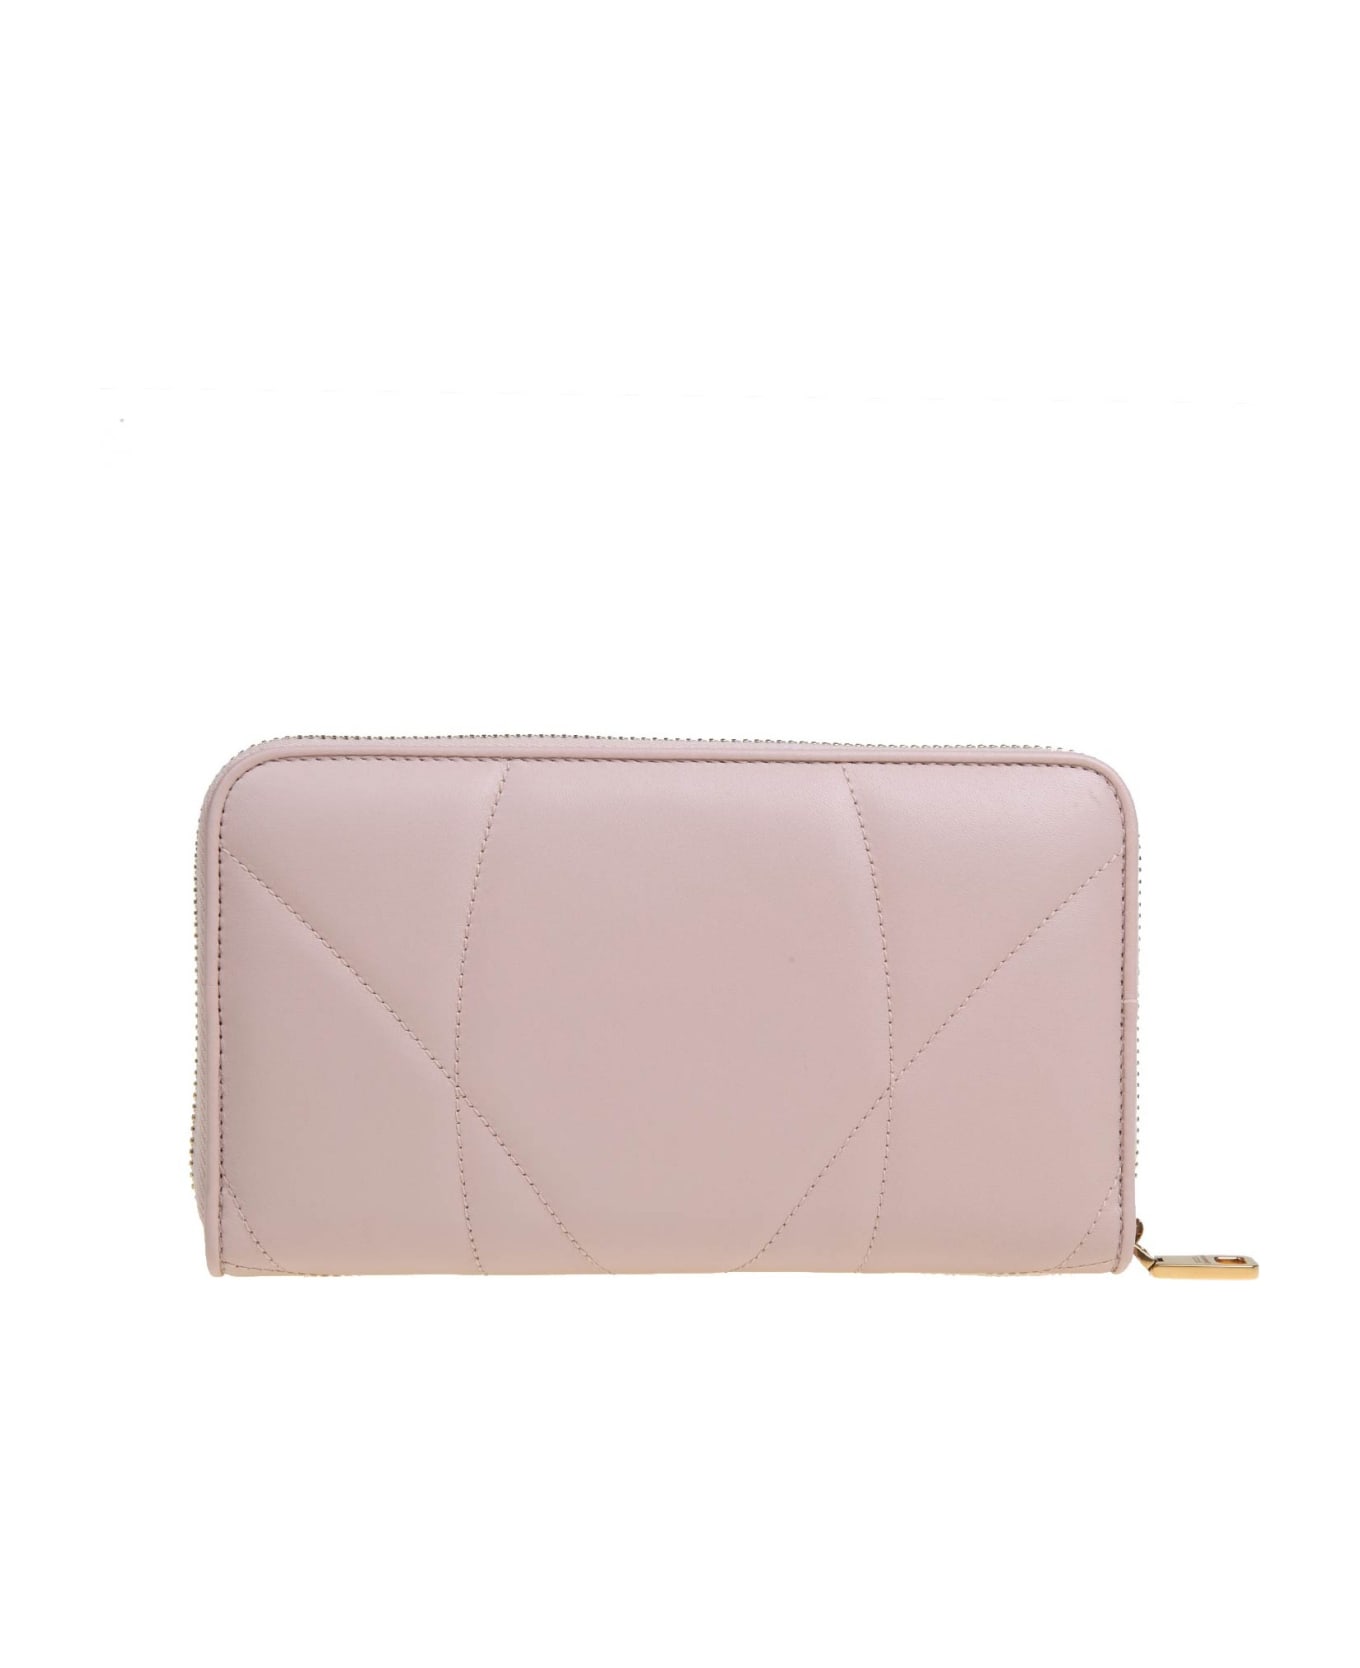 Dolce & Gabbana Quilted Wallet - POWDER